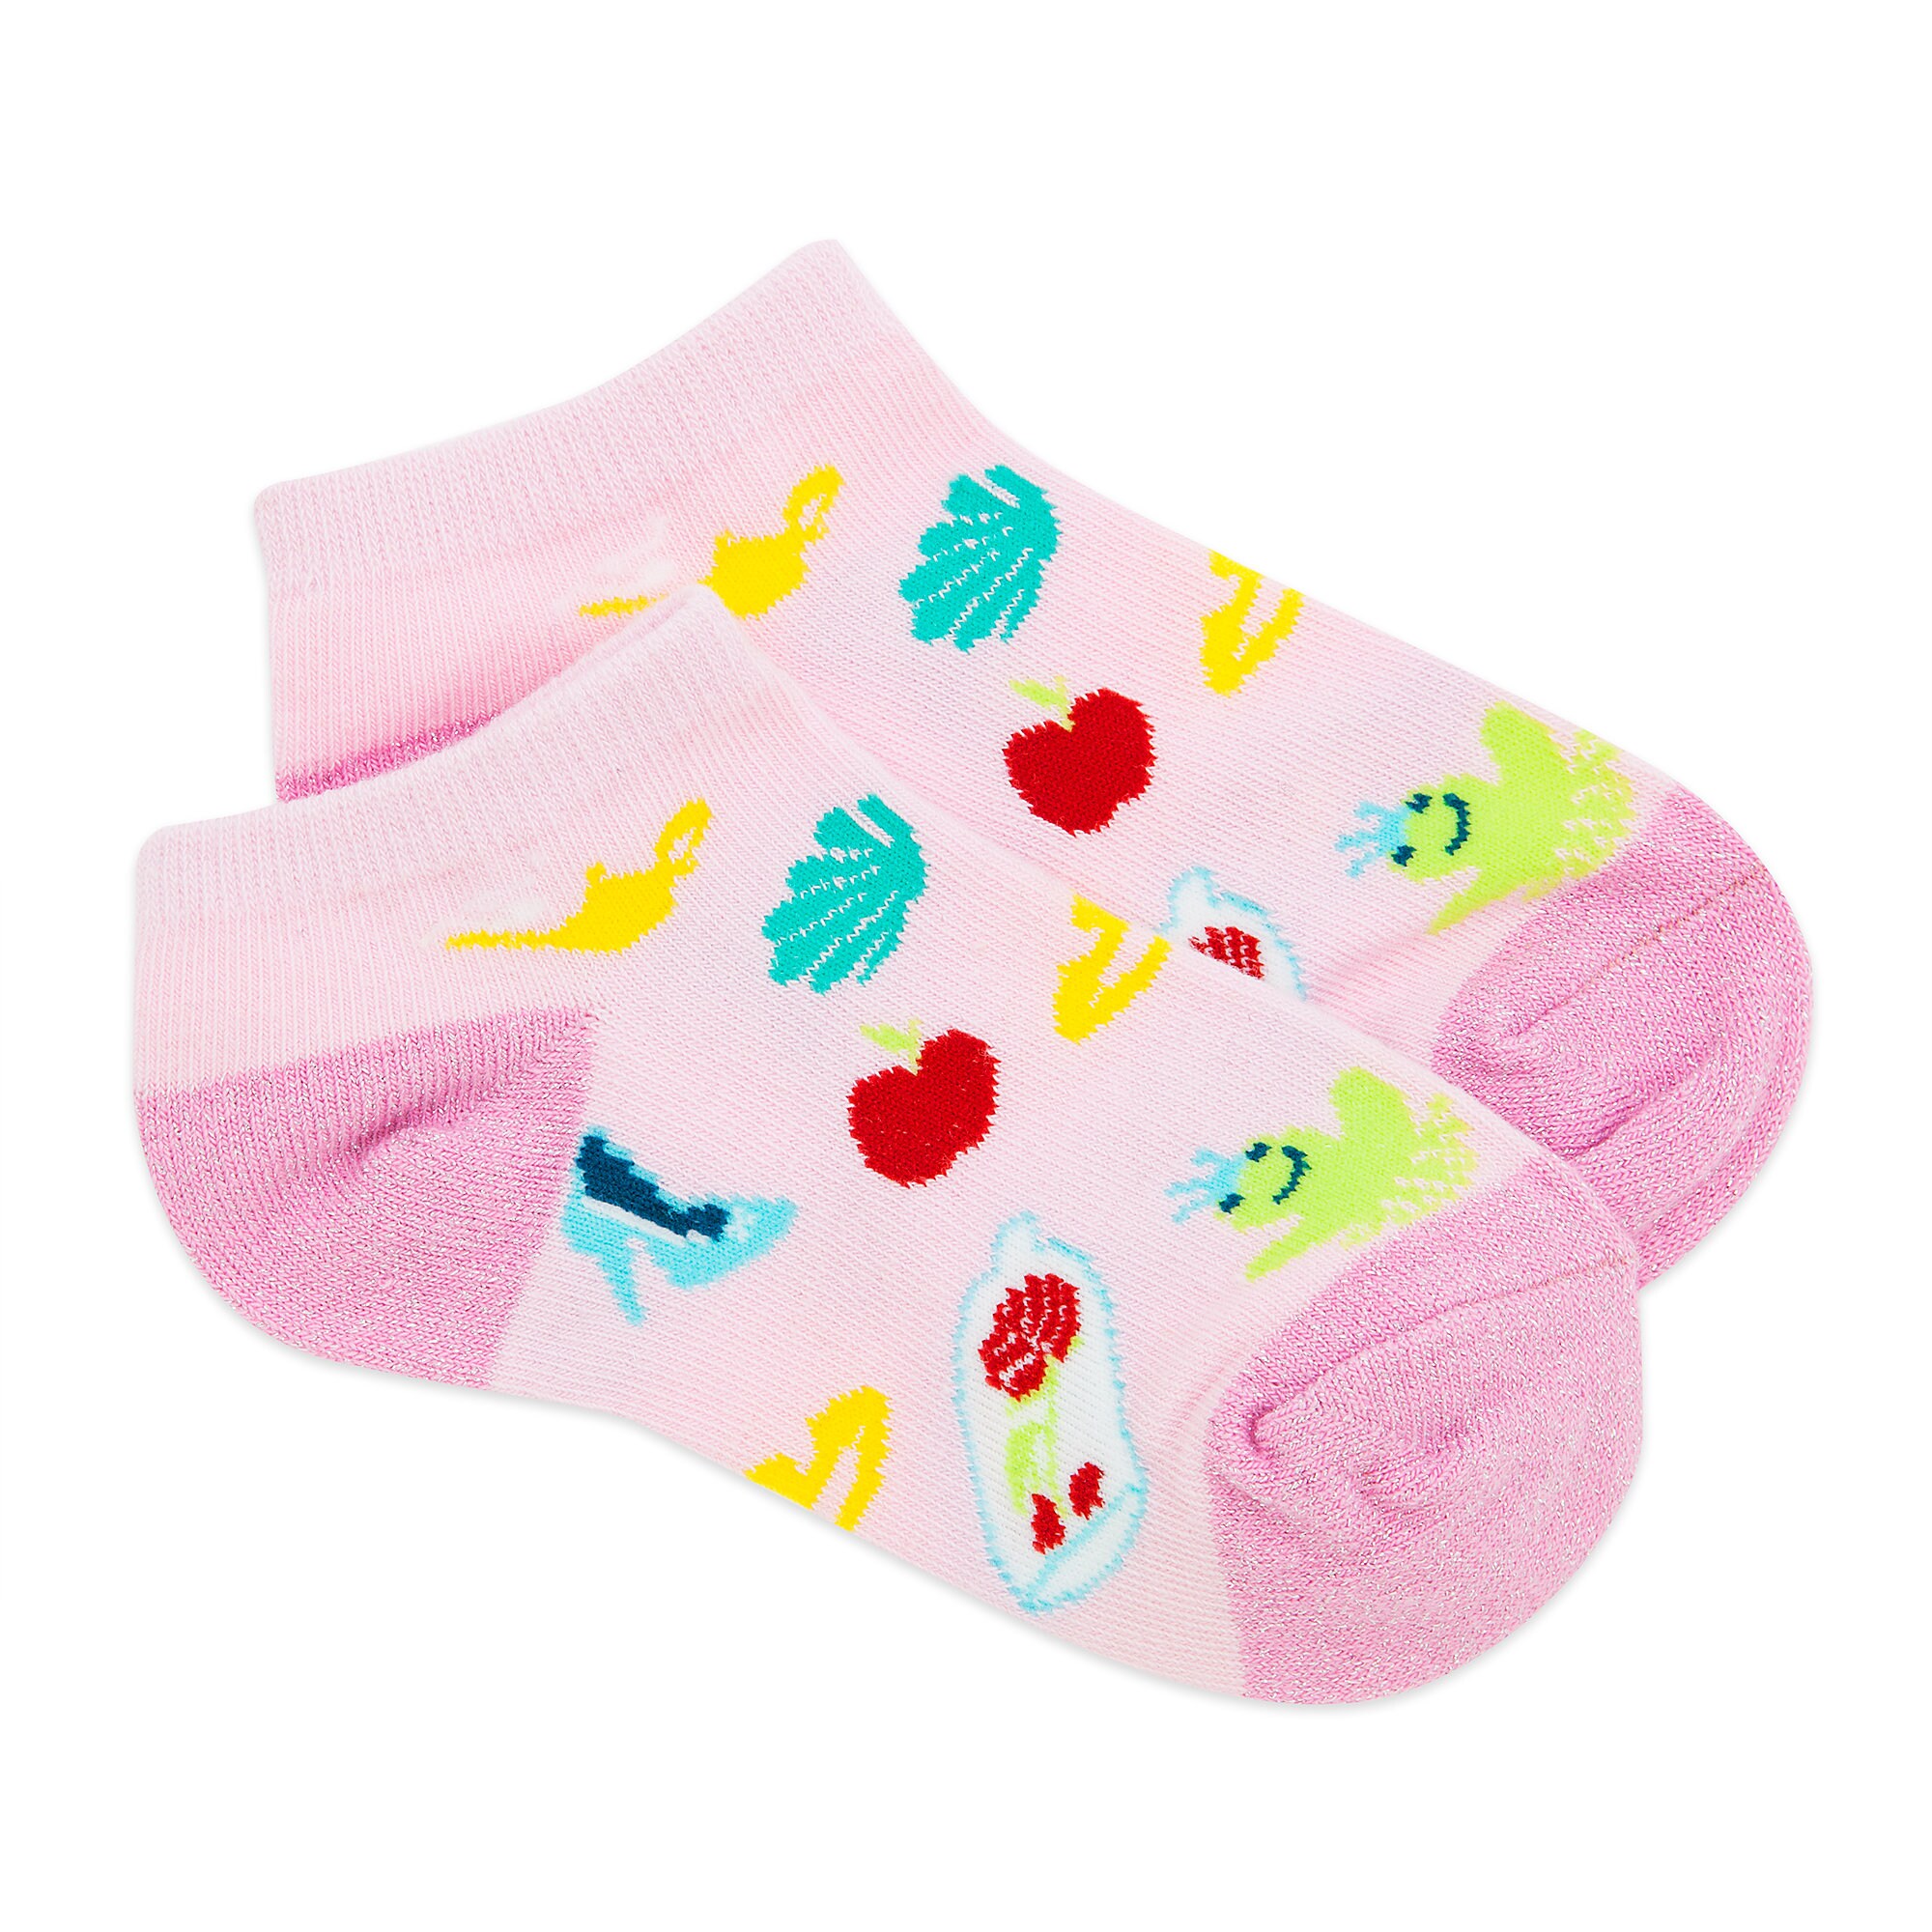 Disney Princess Ankle Socks for Girls